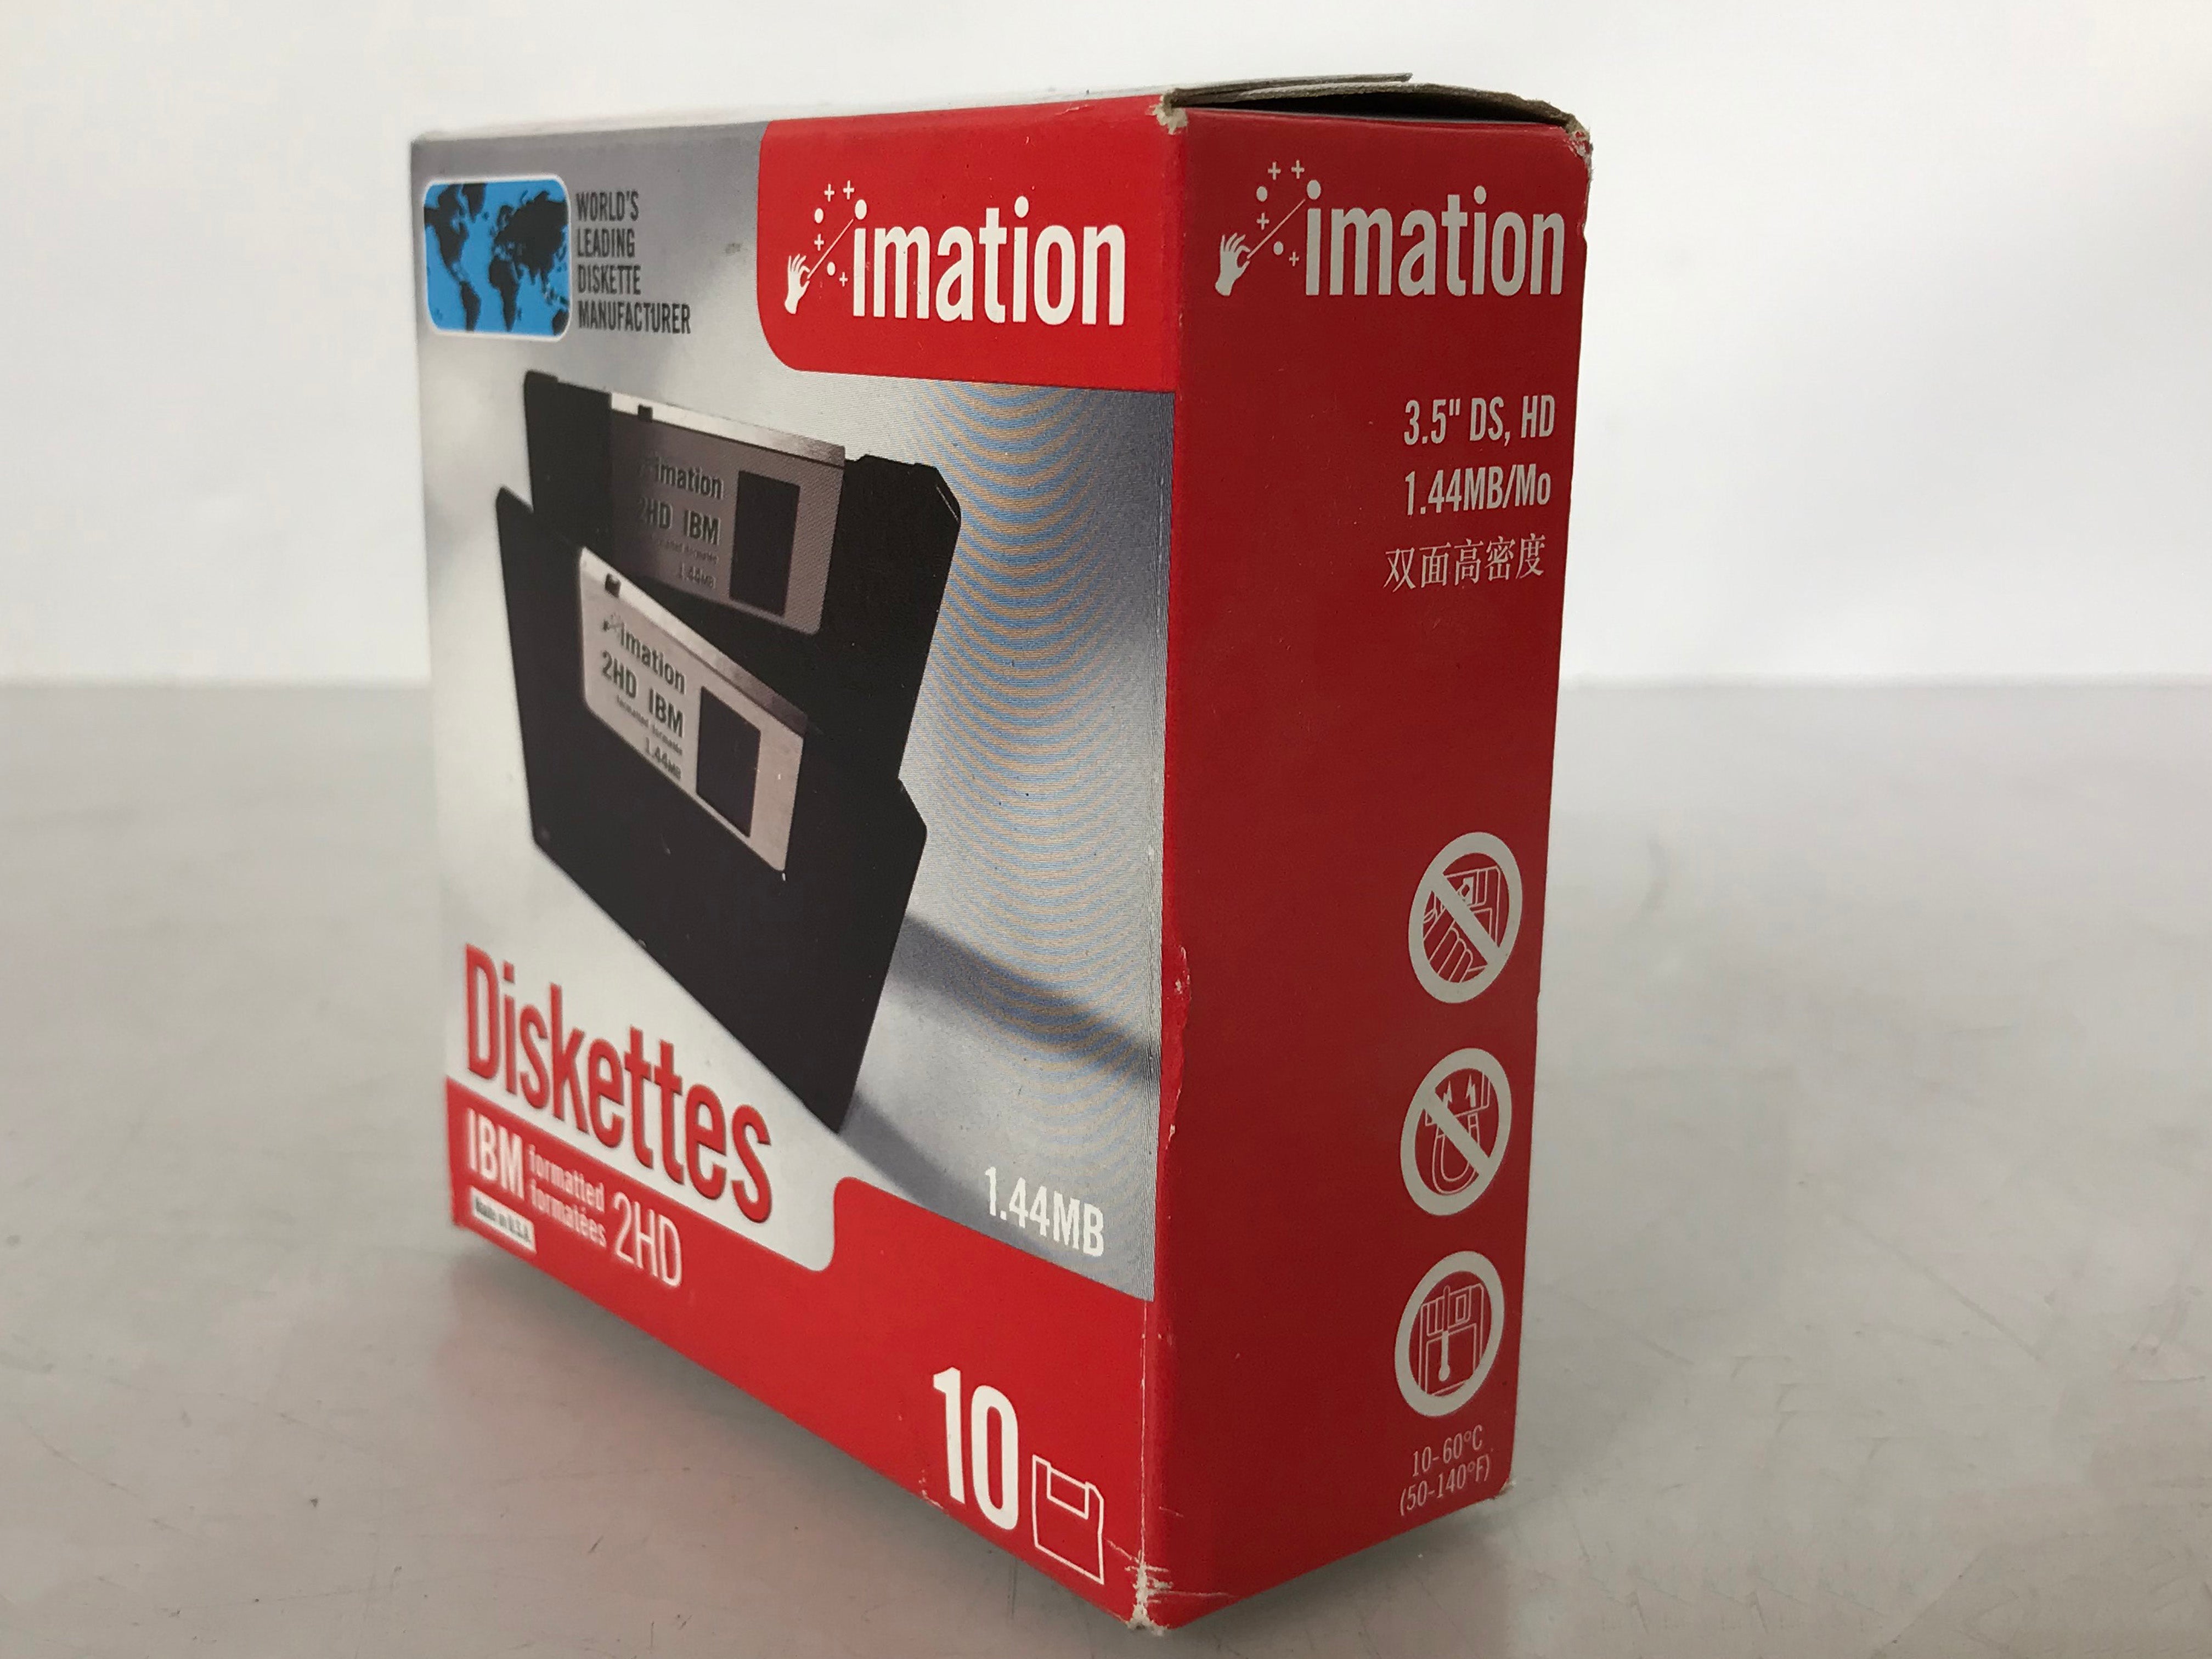 10-Pack IBM Imation Diskettes 2HD 3.5" 1.4MB Floppy Disks